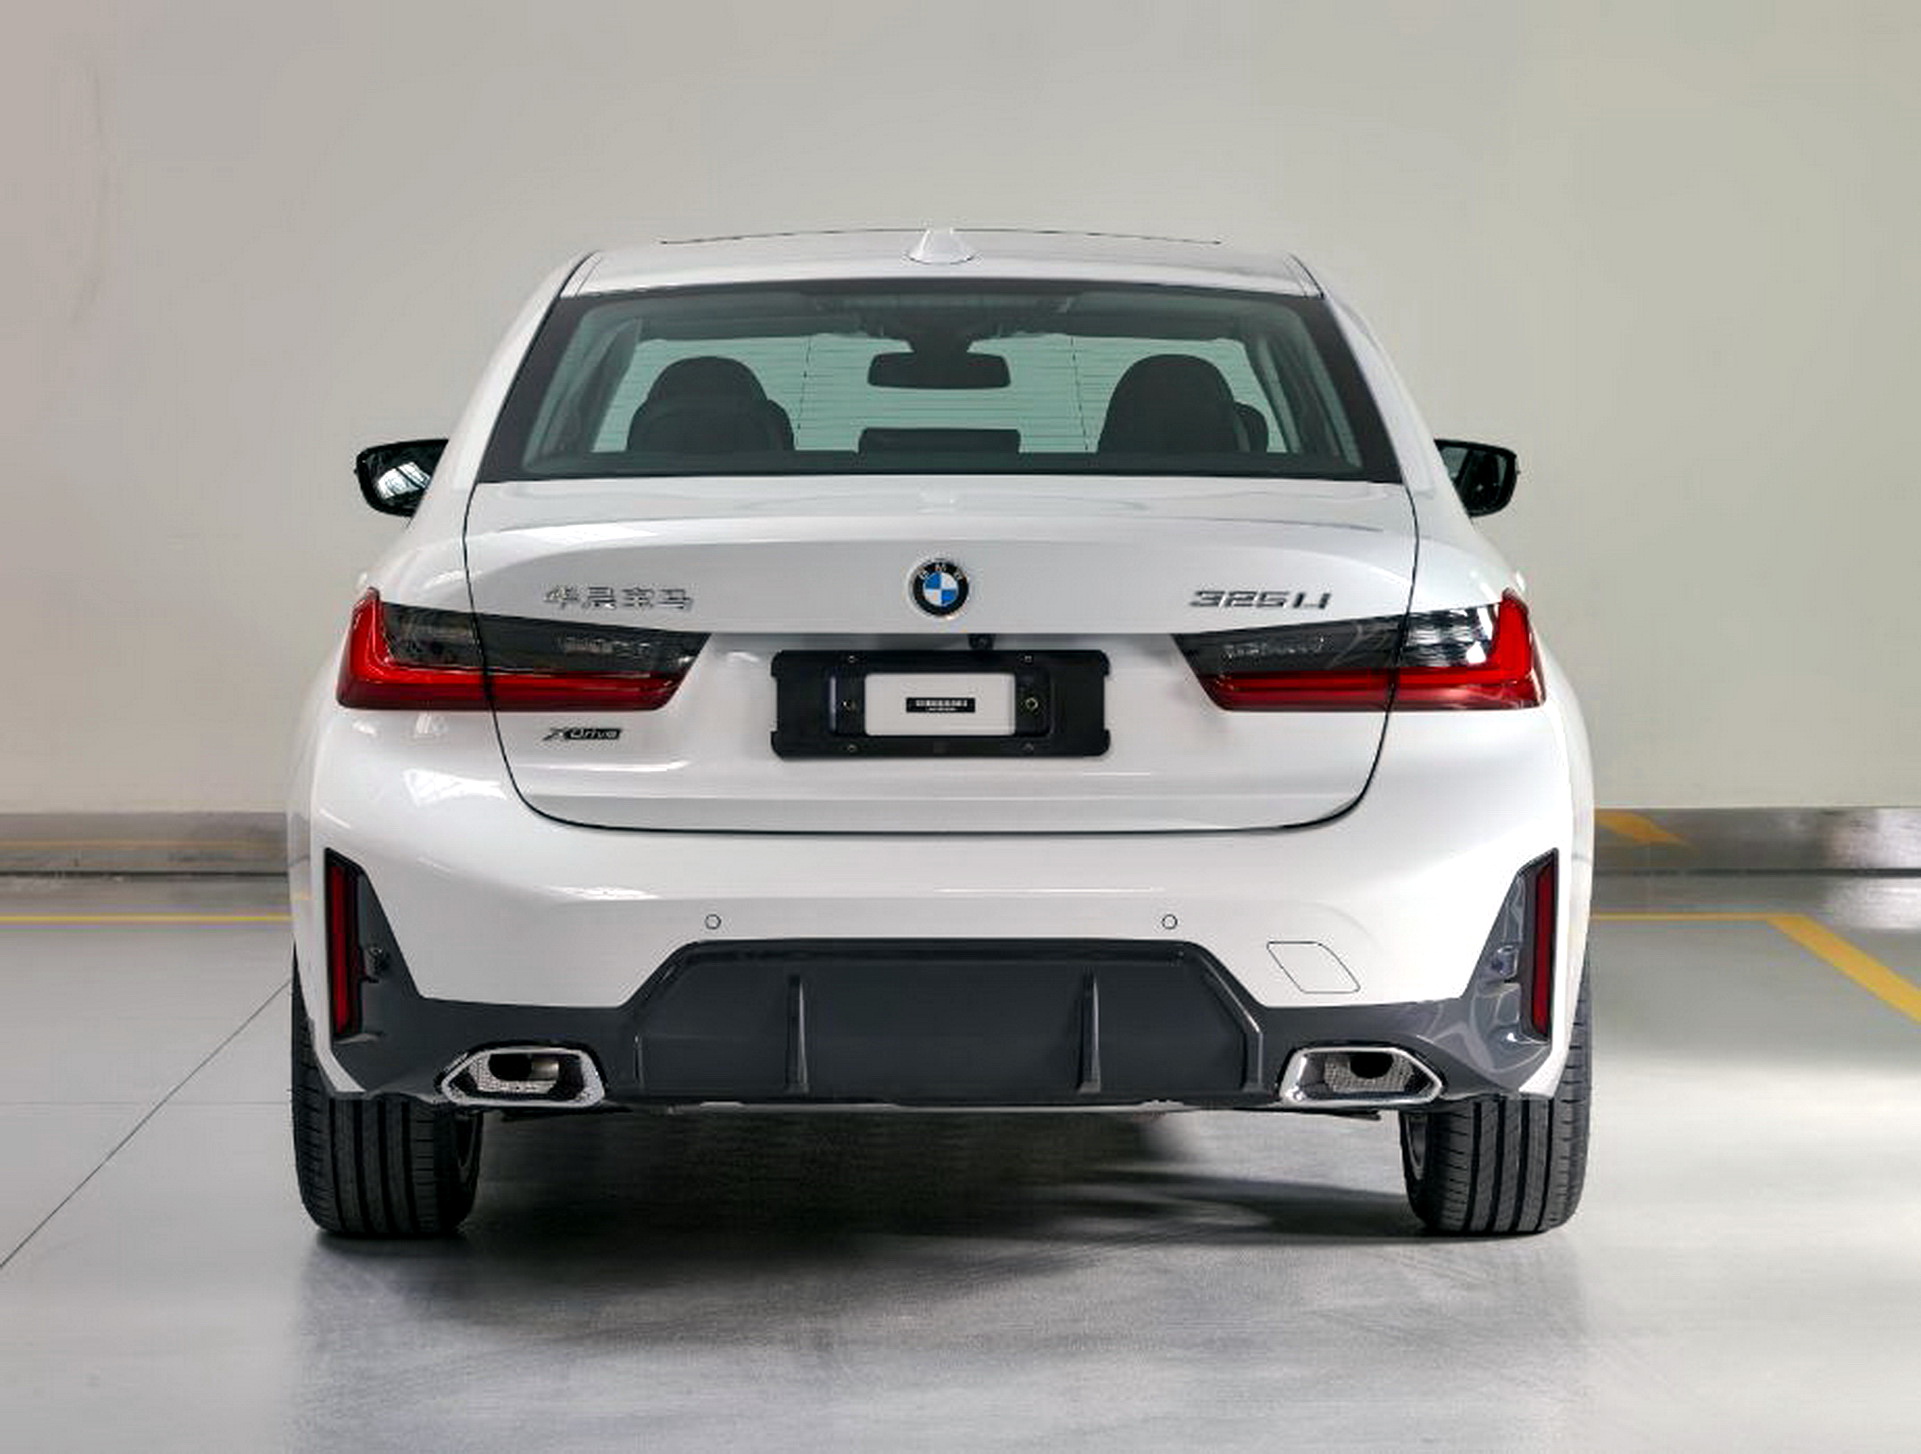 2023 BMW 325Xi Release